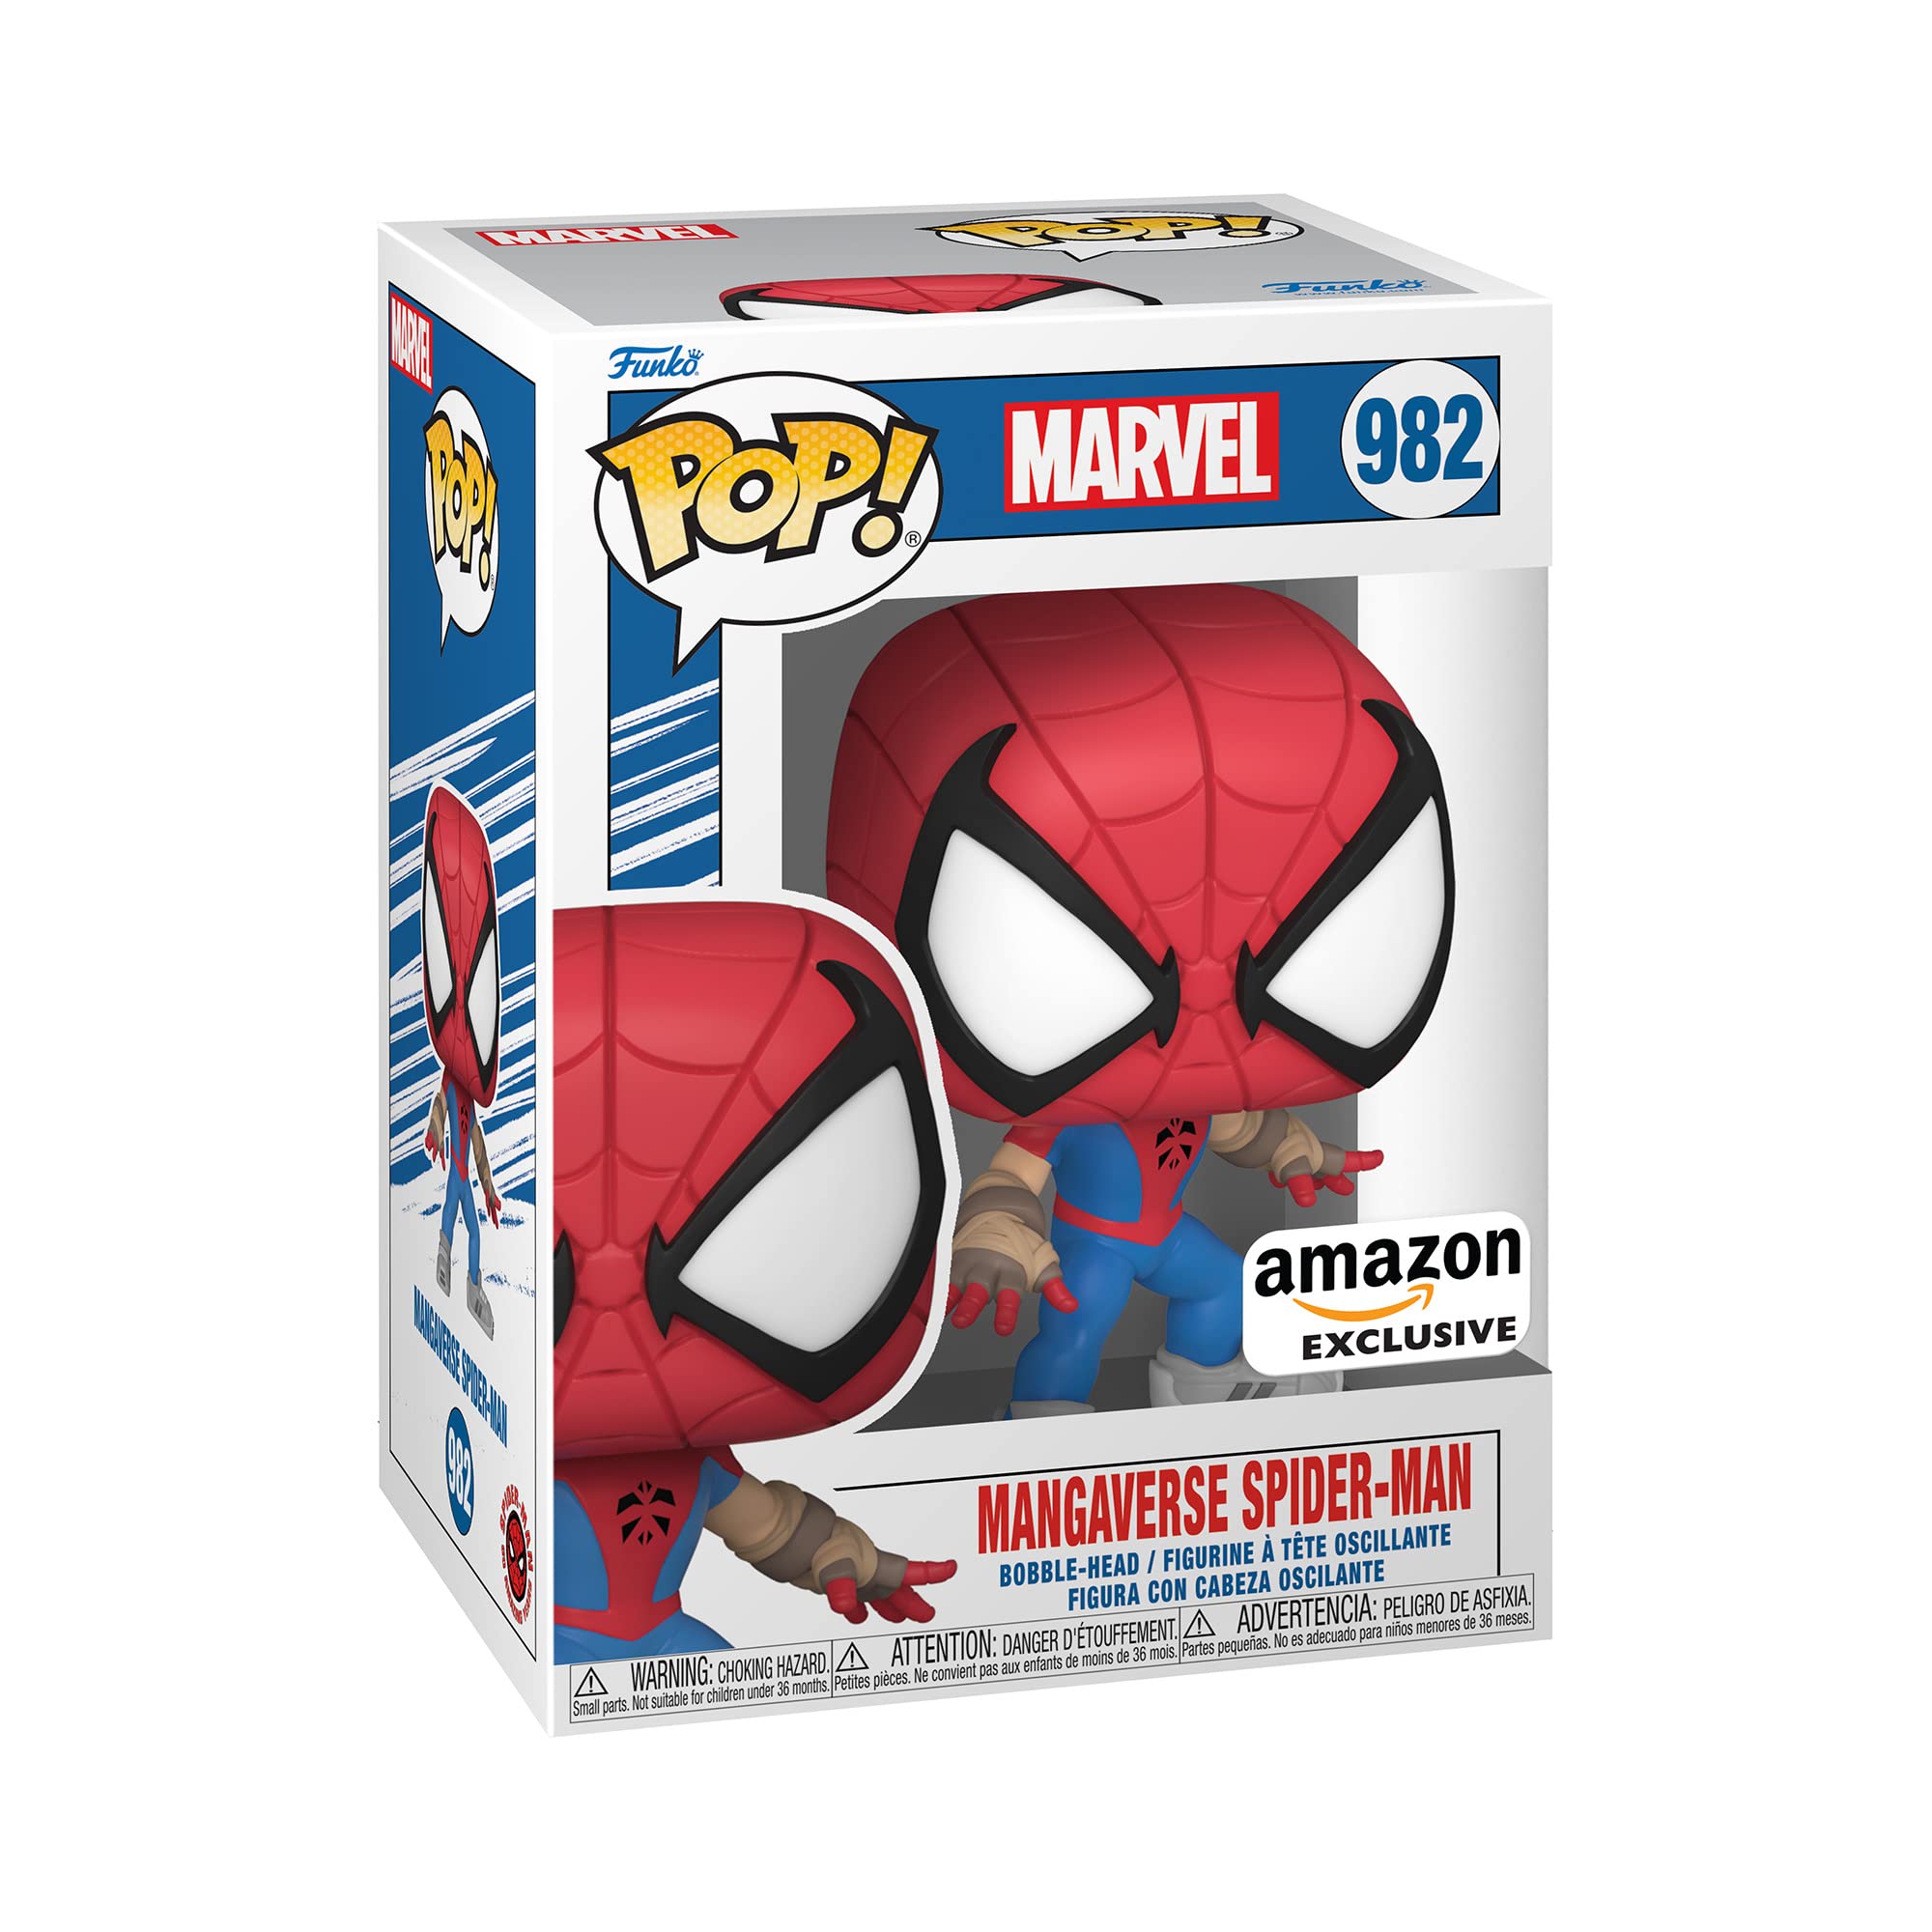 Funko Pop! Marvel: Year of The Spider - Mangaverse Spider-Man, Amazon Exclusive